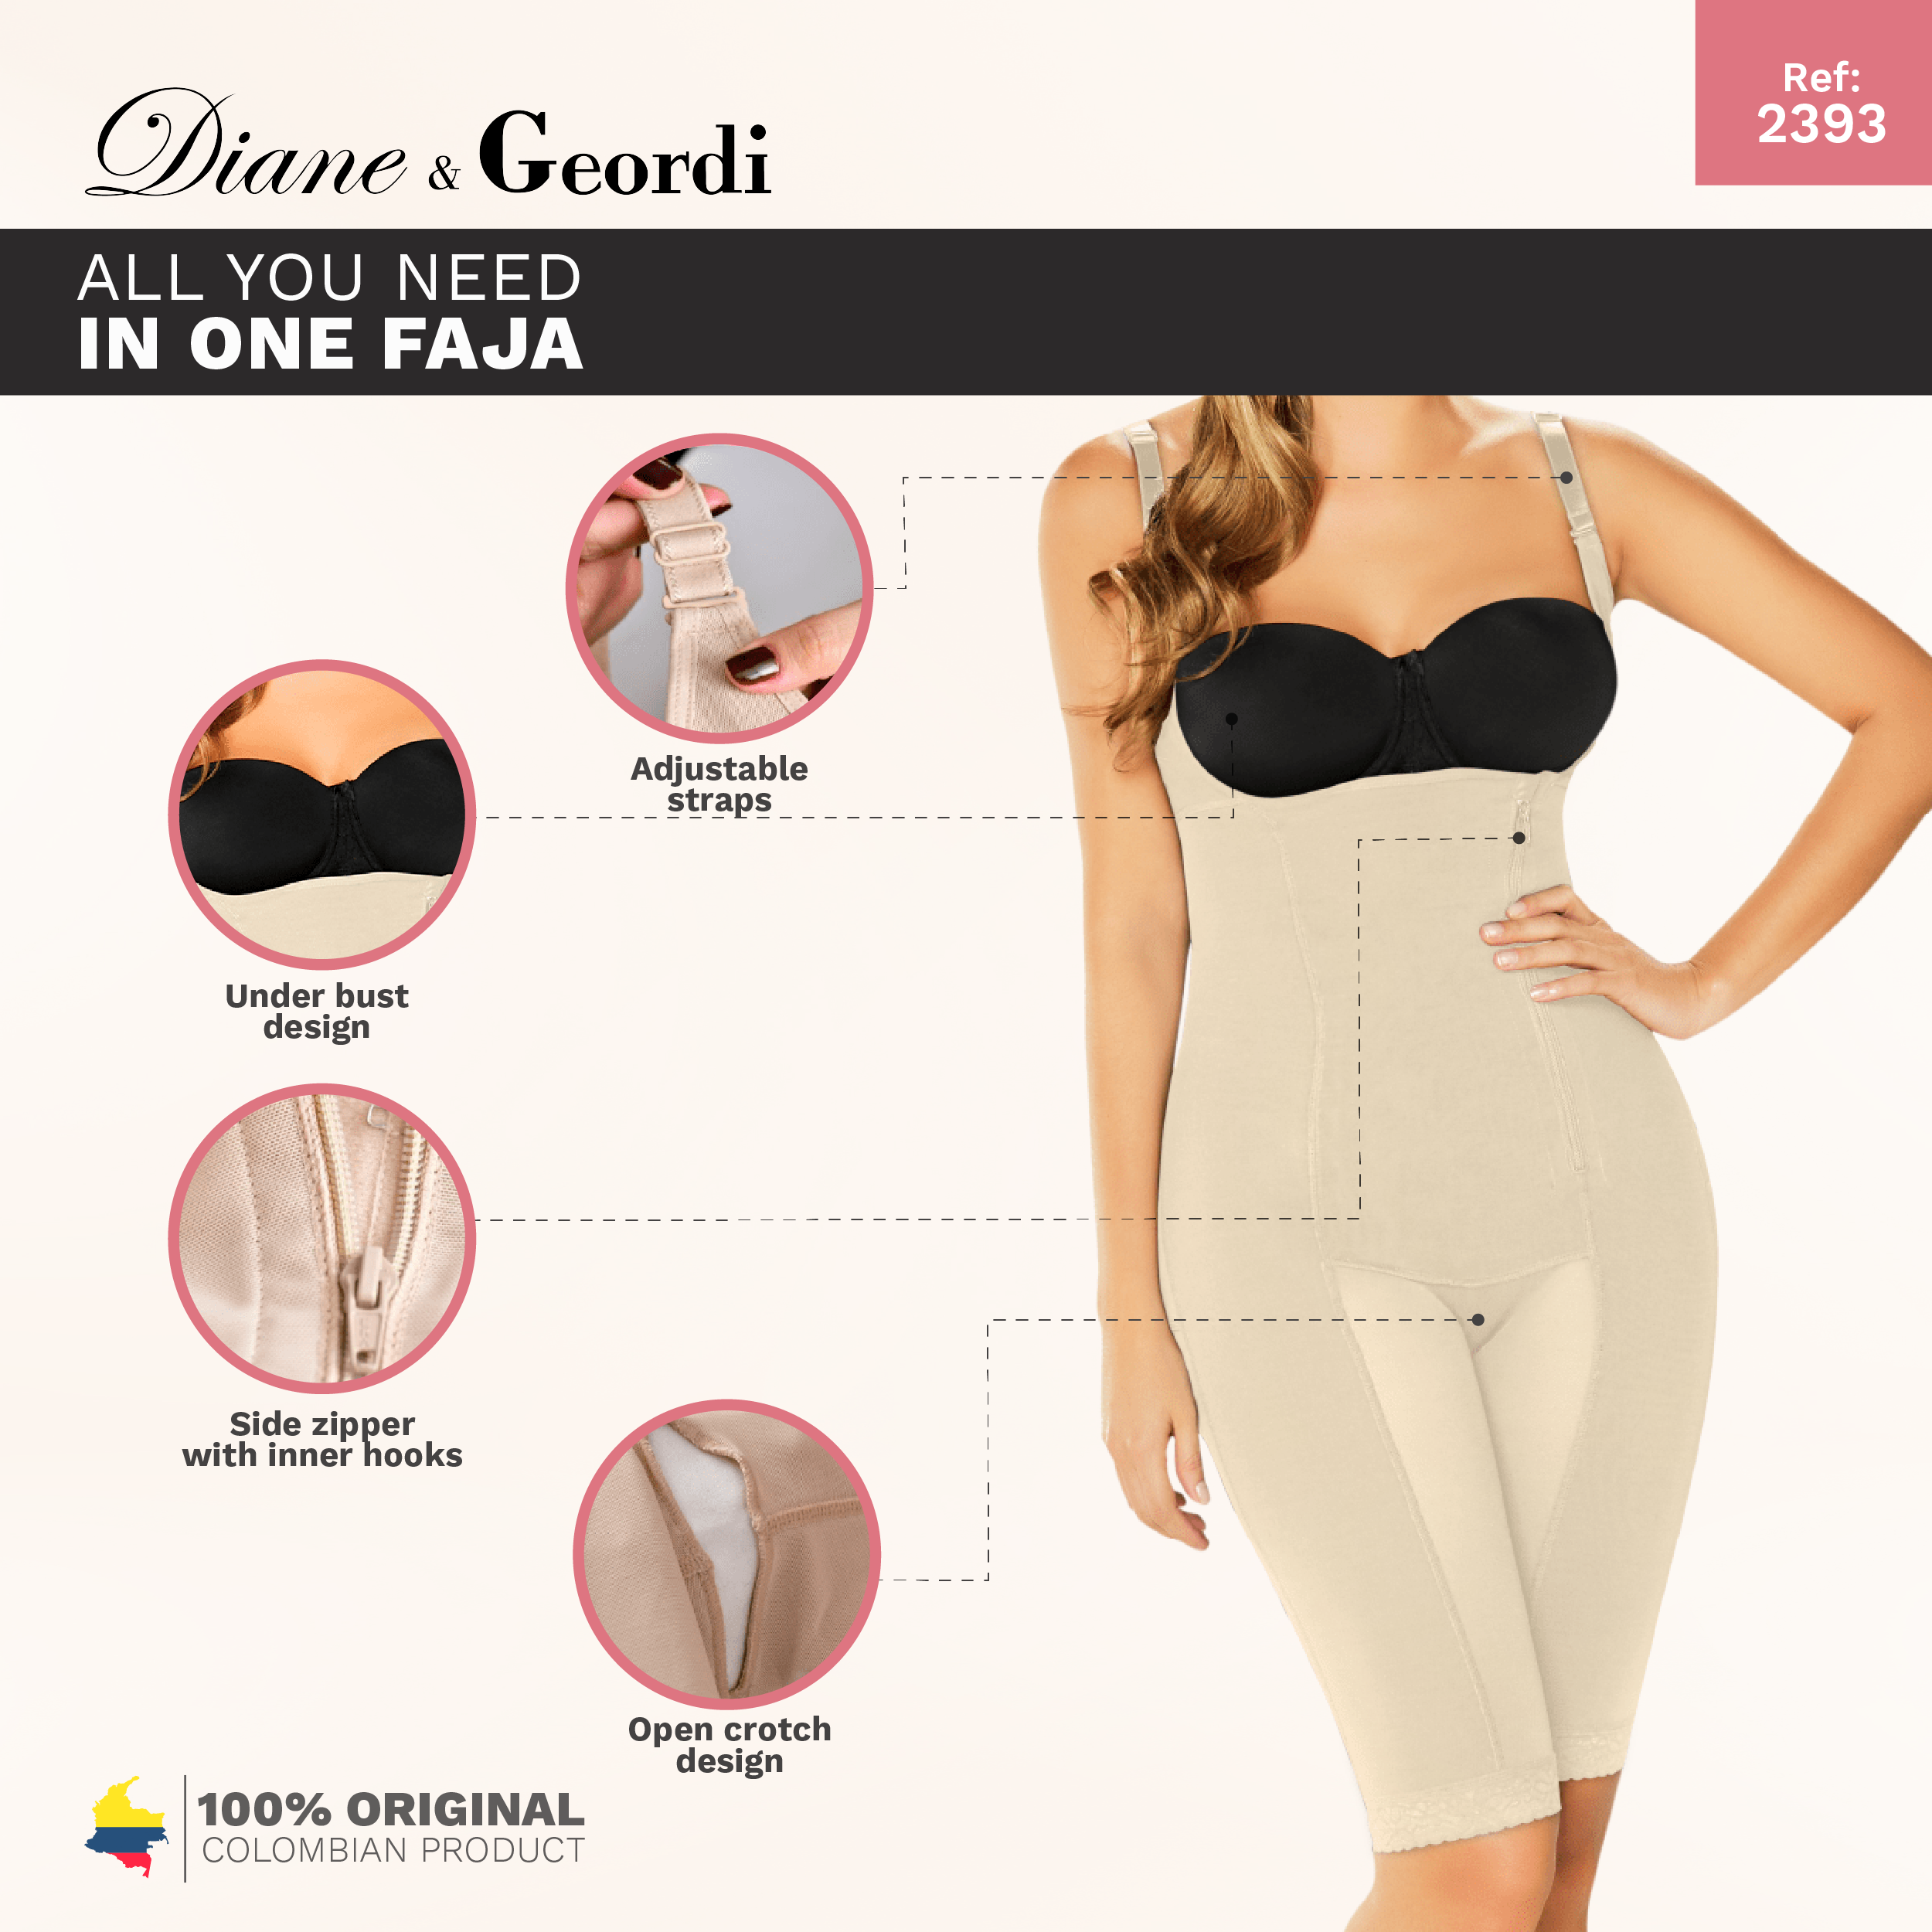 Fajas Diane & Geordi 002375  Slimming Bodysuit Colombian Faja